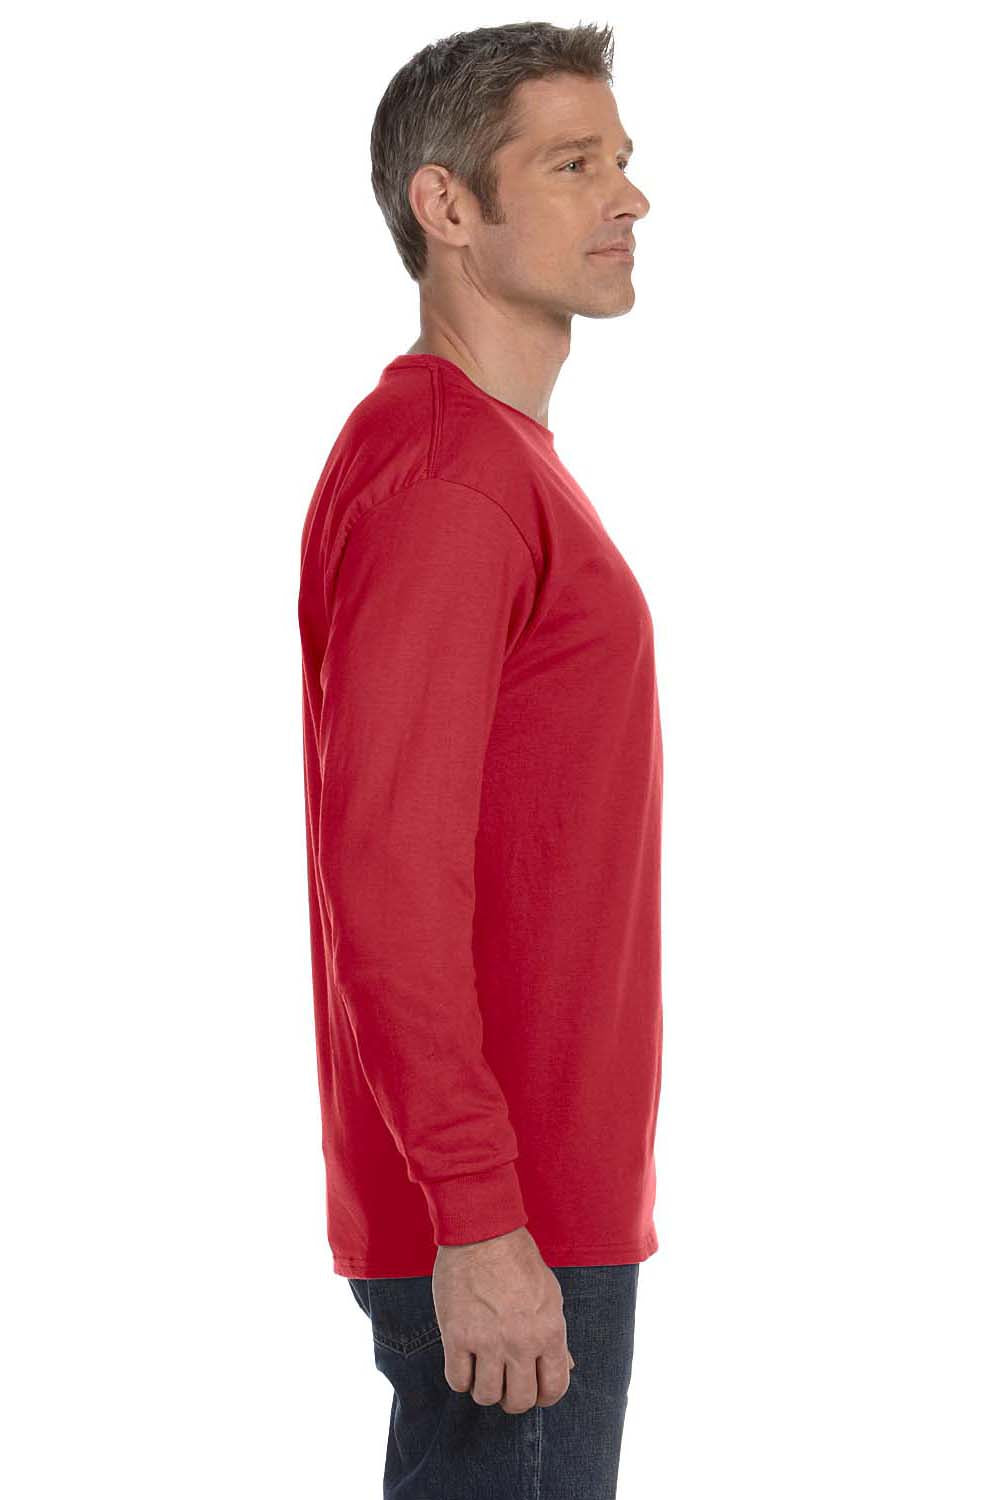 Jerzees 29L Mens Dri-Power Moisture Wicking Long Sleeve Crewneck T-Shirt Red Side